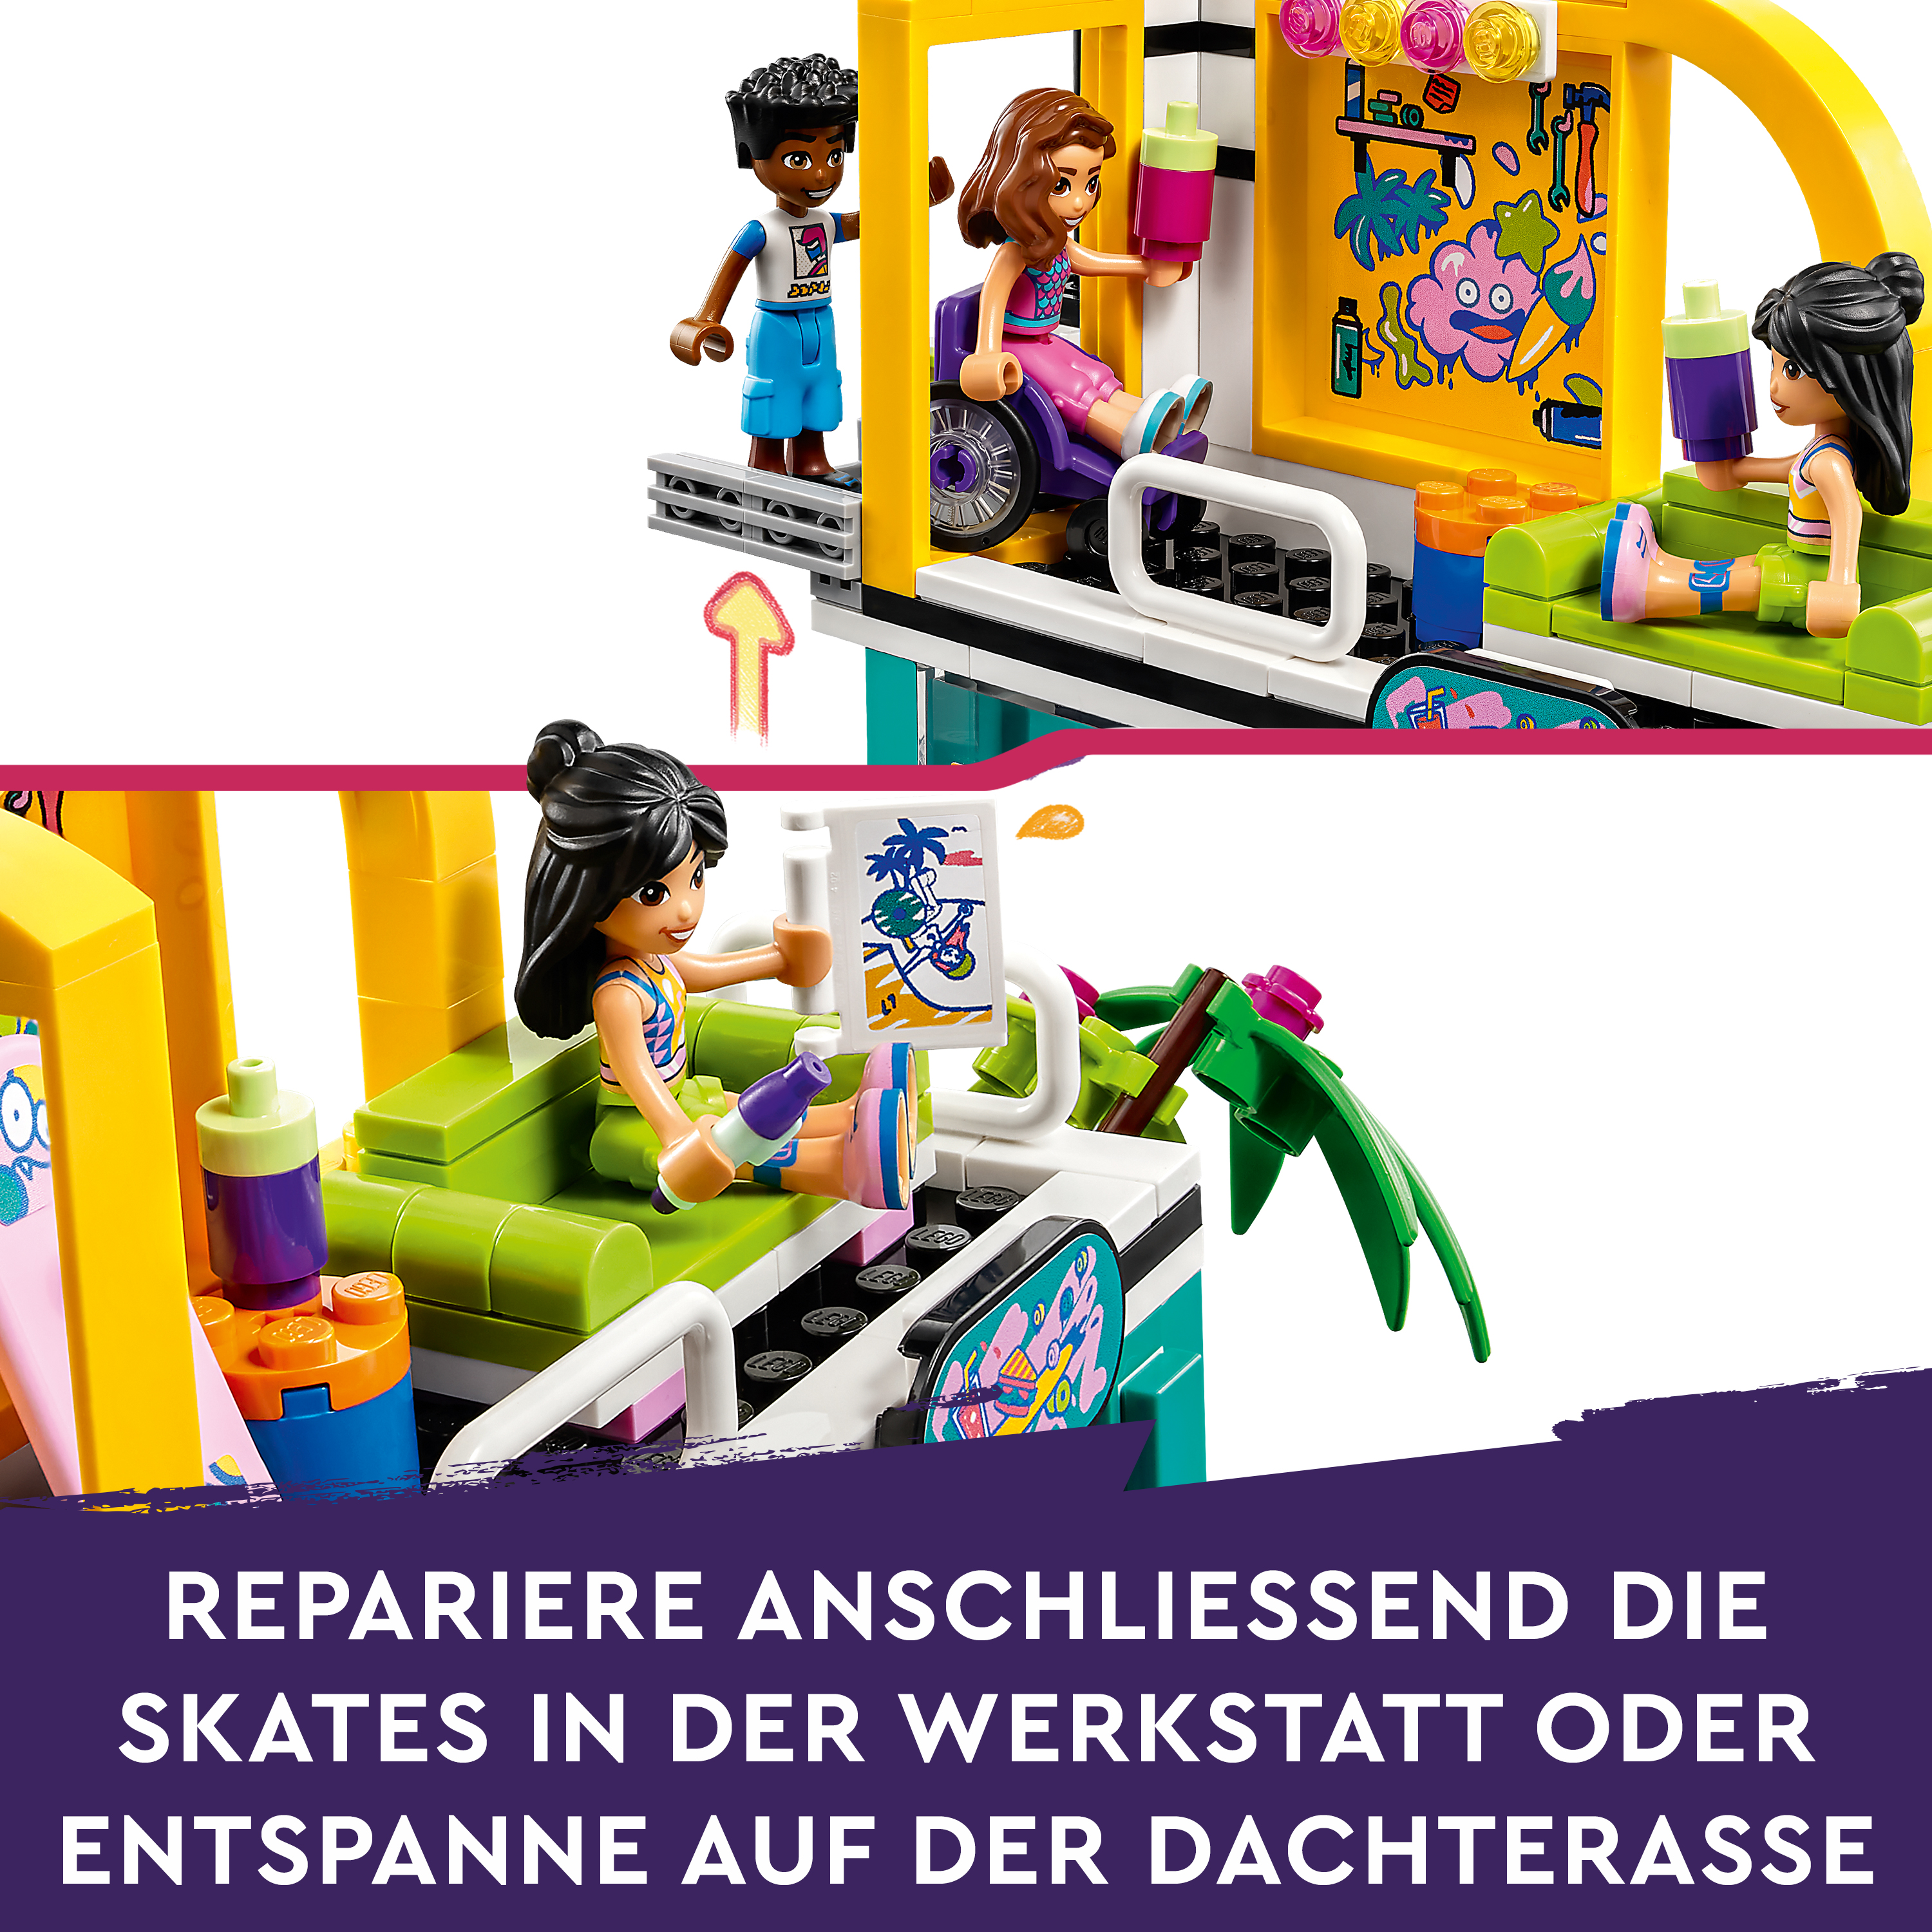 LEGO Friends 41751 Skatepark Bausatz, Mehrfarbig